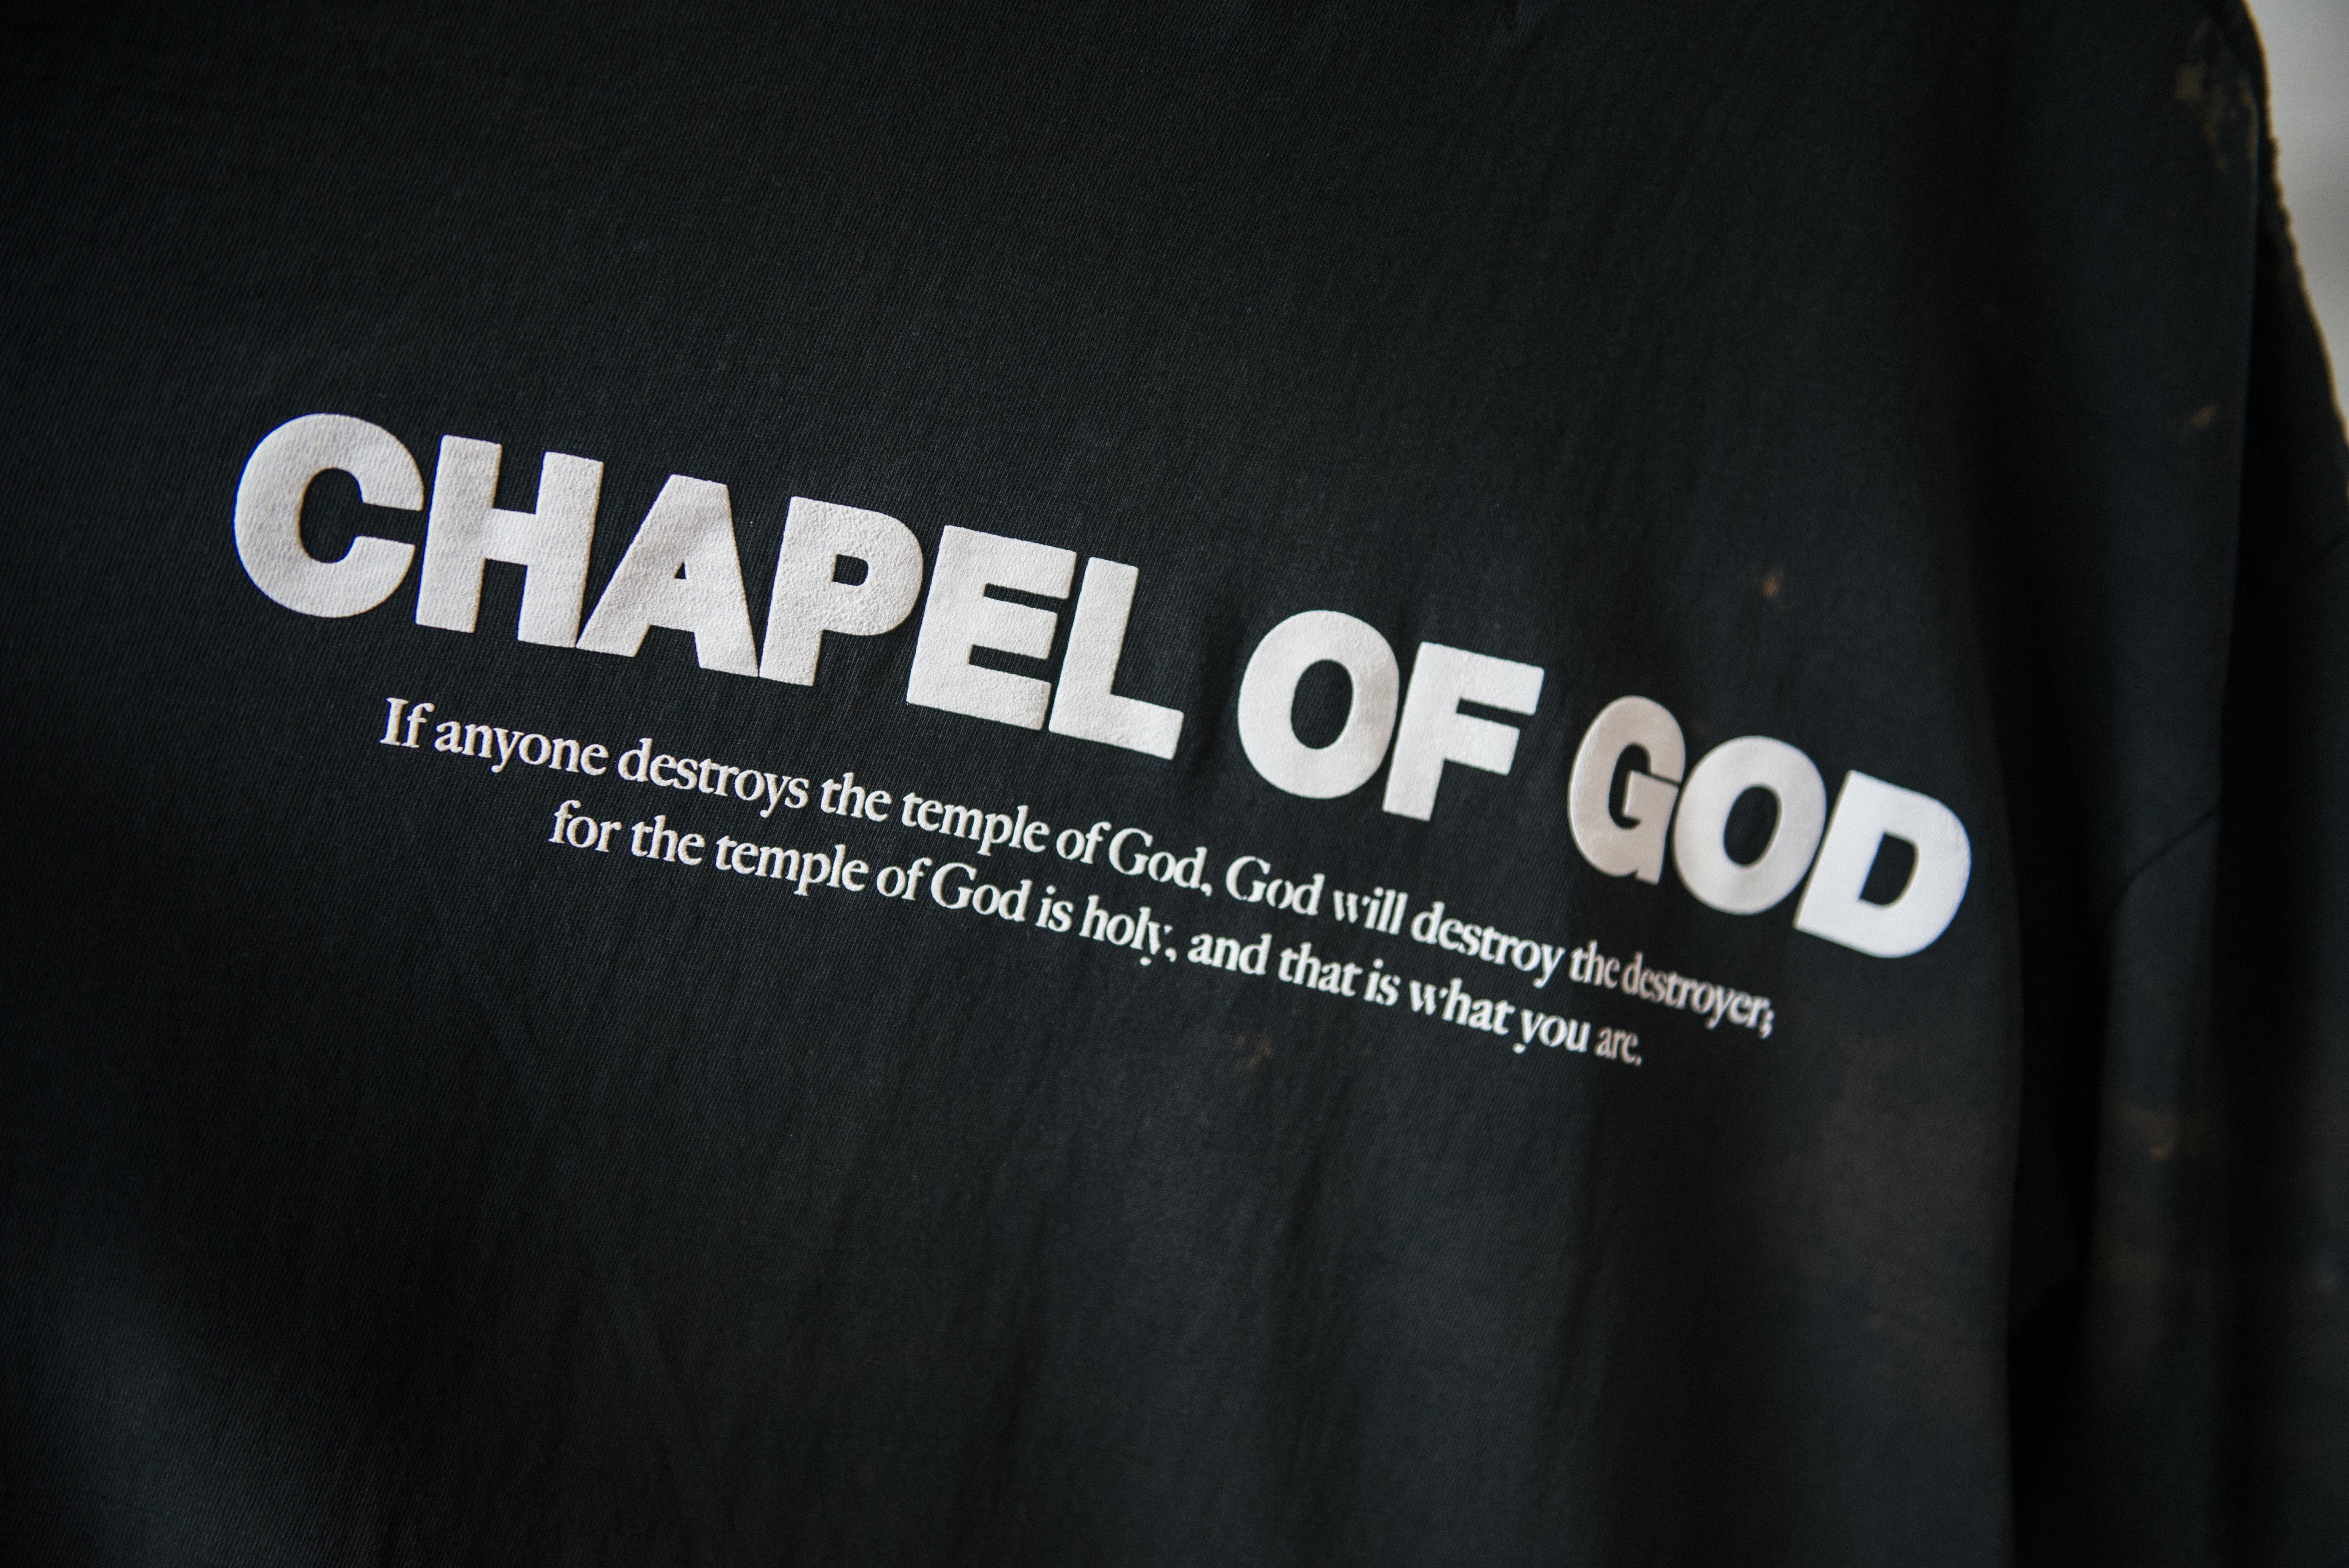 Fear of God Clothing Logo - Fear of God x Chapel NYC “Chapel of God” release at Maxfield LA ...